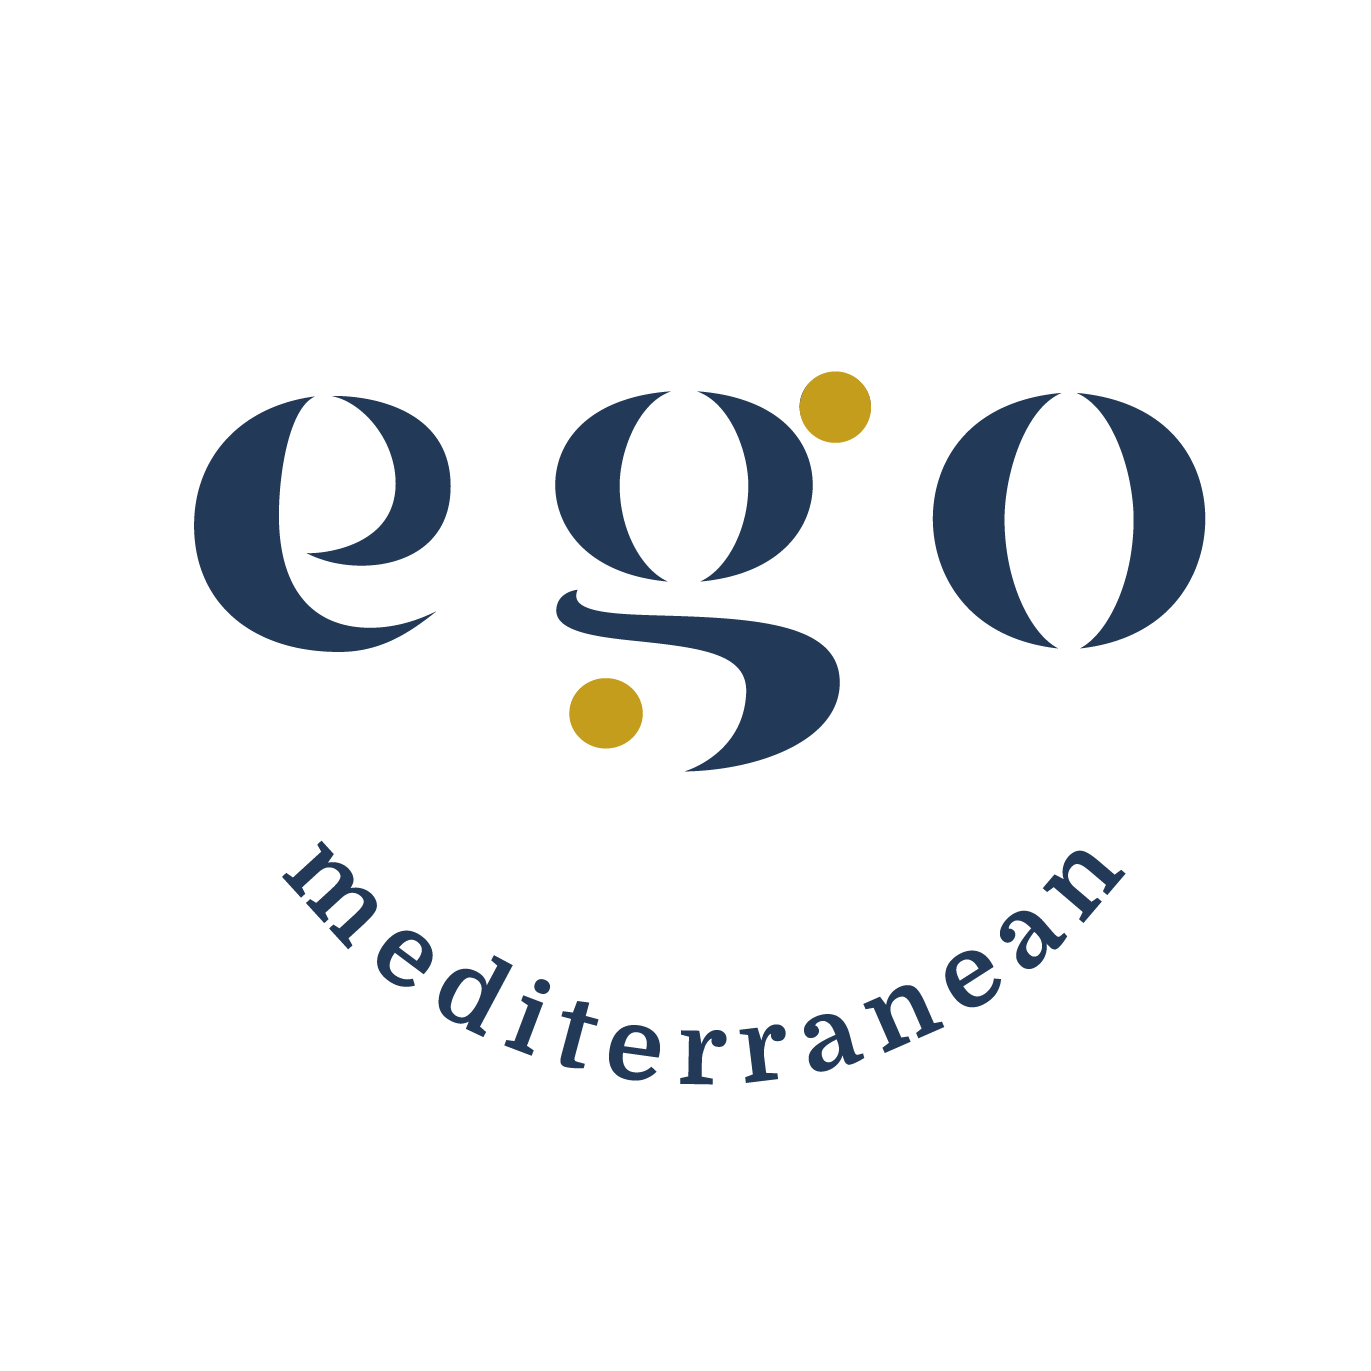 ego_restaurant_company_log